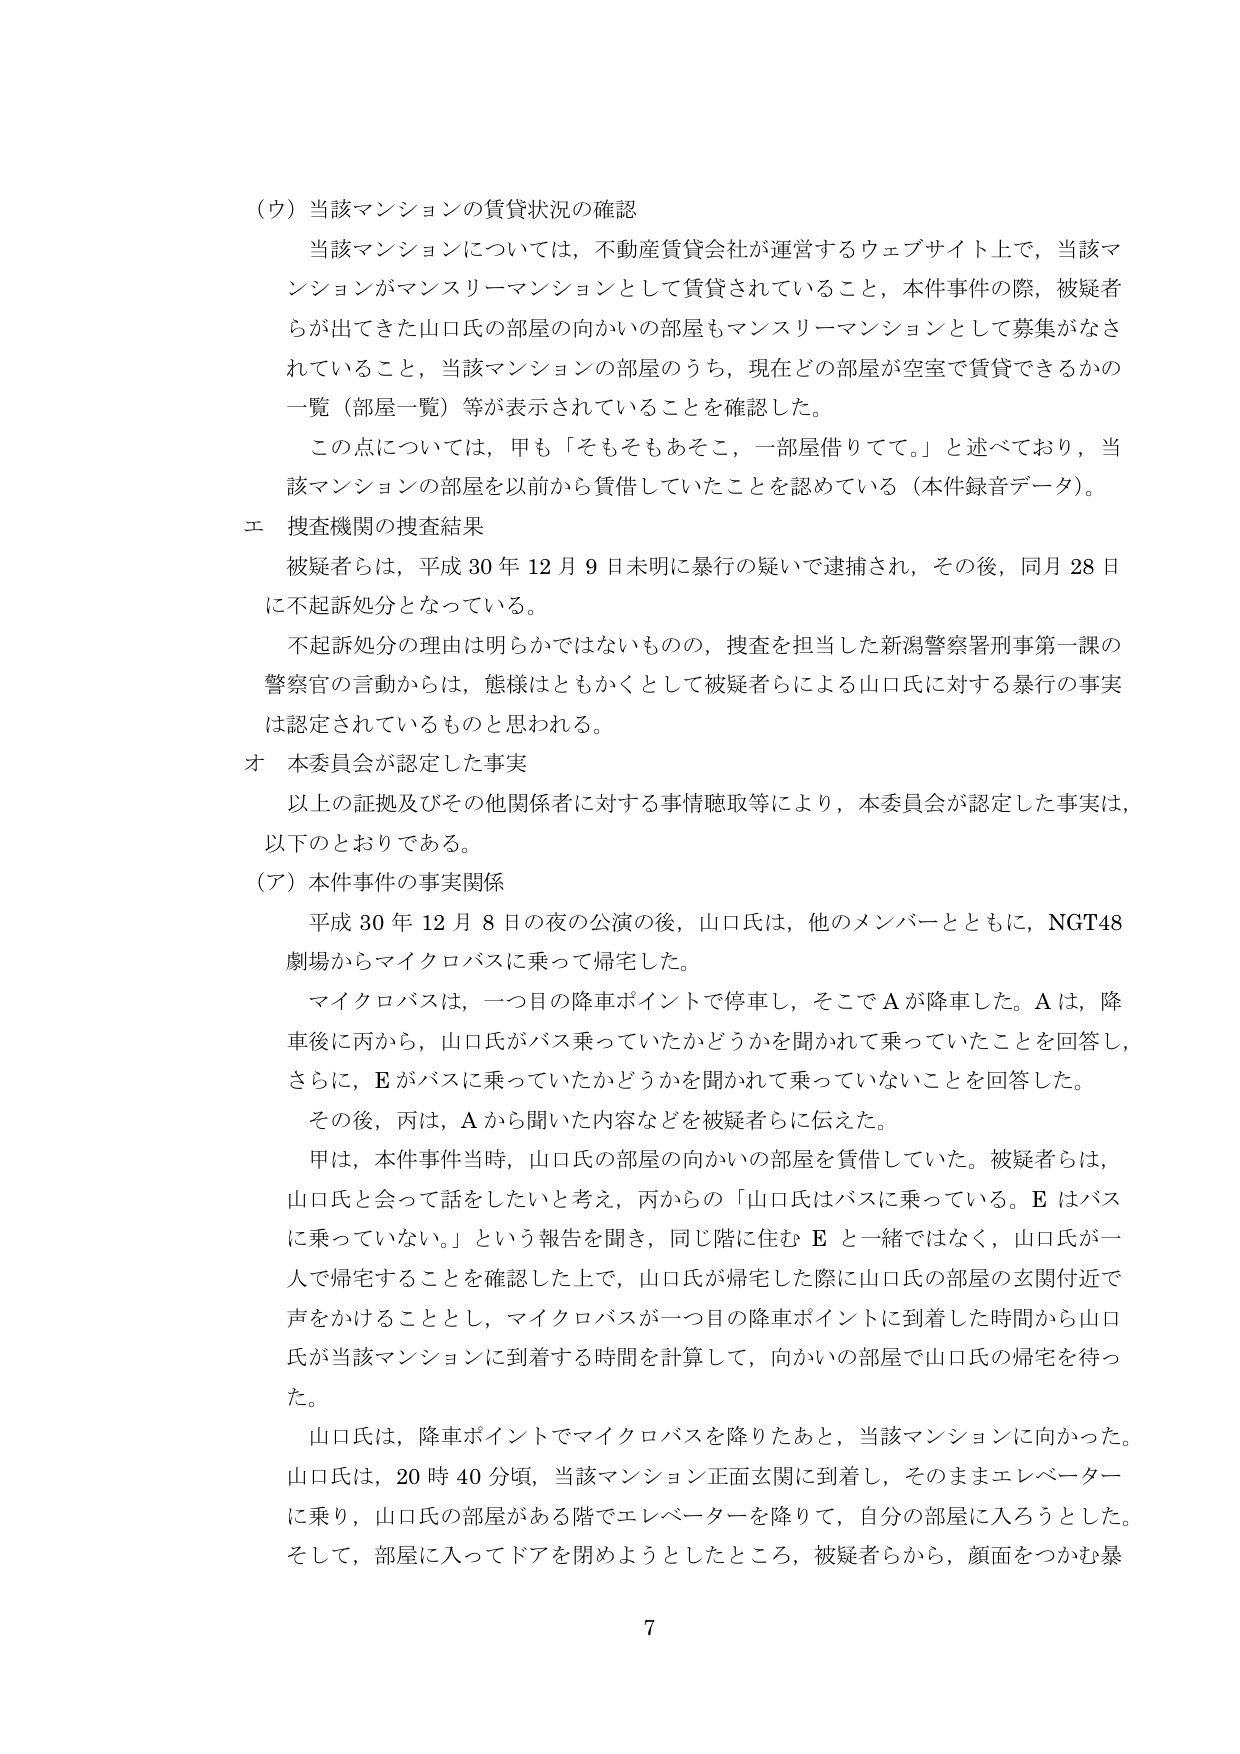 NGT48第三者委員会調査報告書09